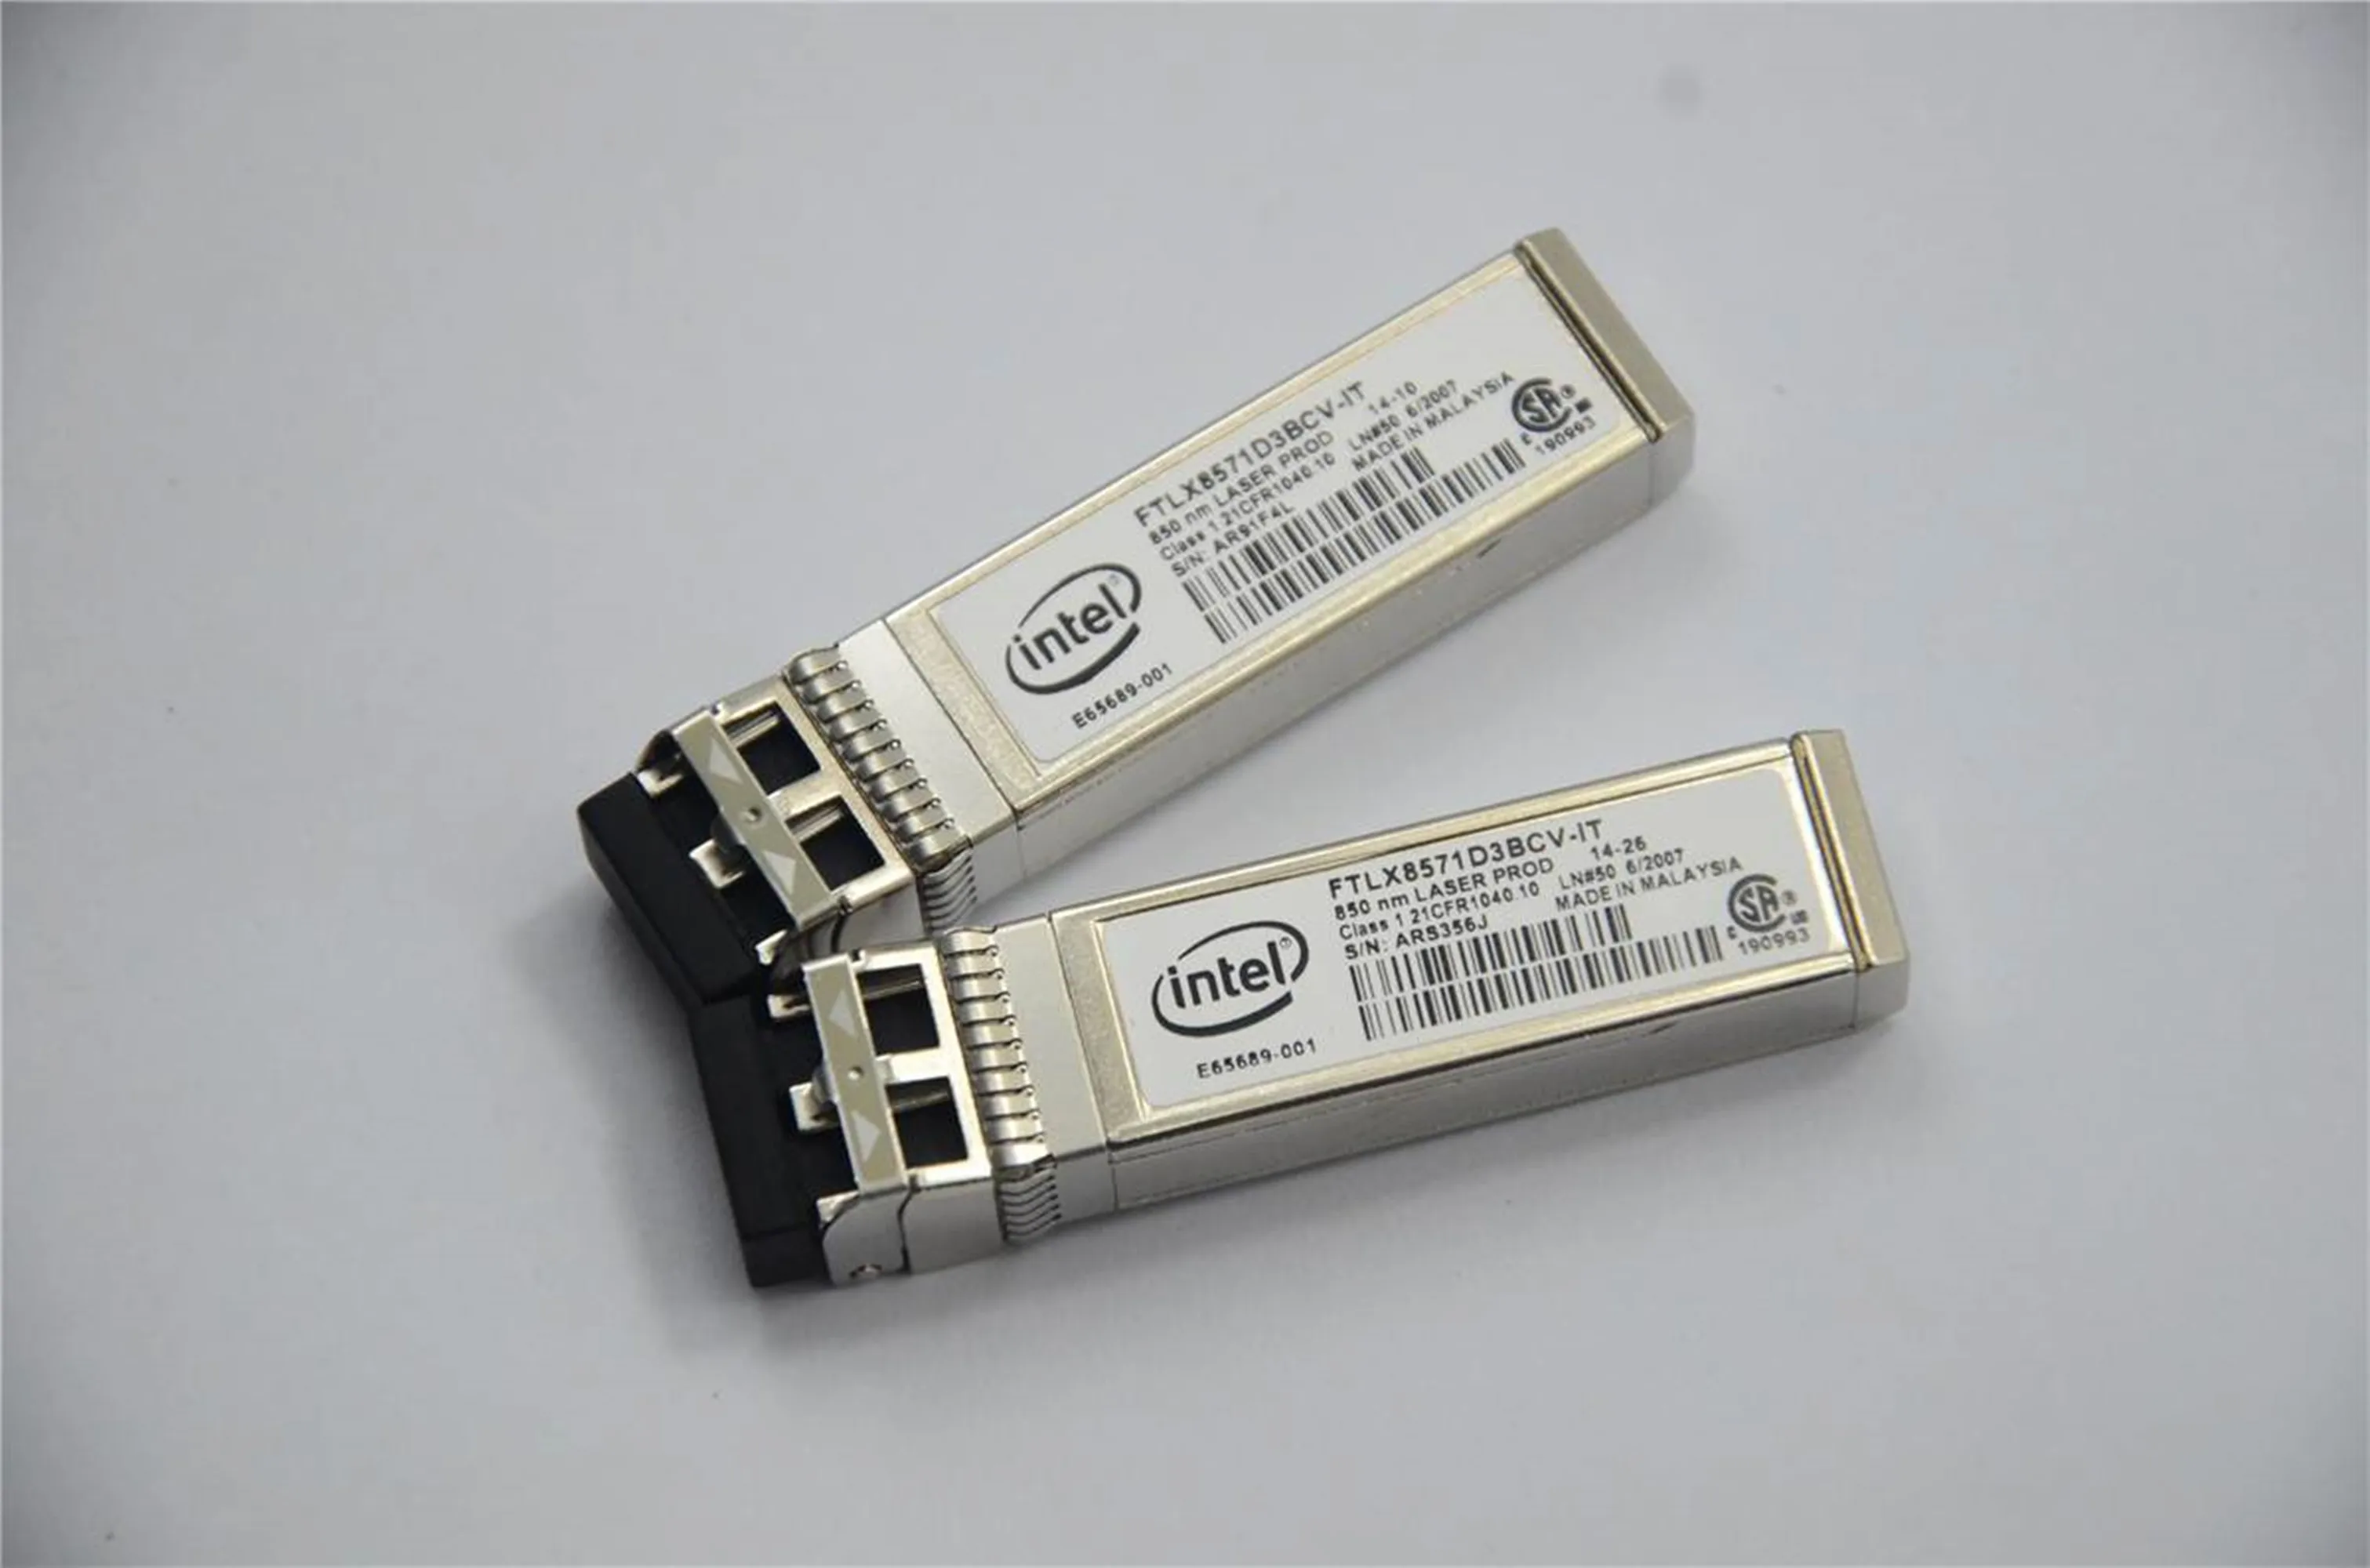 Enlarge Intel optical fiber sfp 10g/FTLX8571D3BCV-IT/10G SFP/E65689-001/X710 X520 transceiver/adapter general 10g/10G Fiber optic module